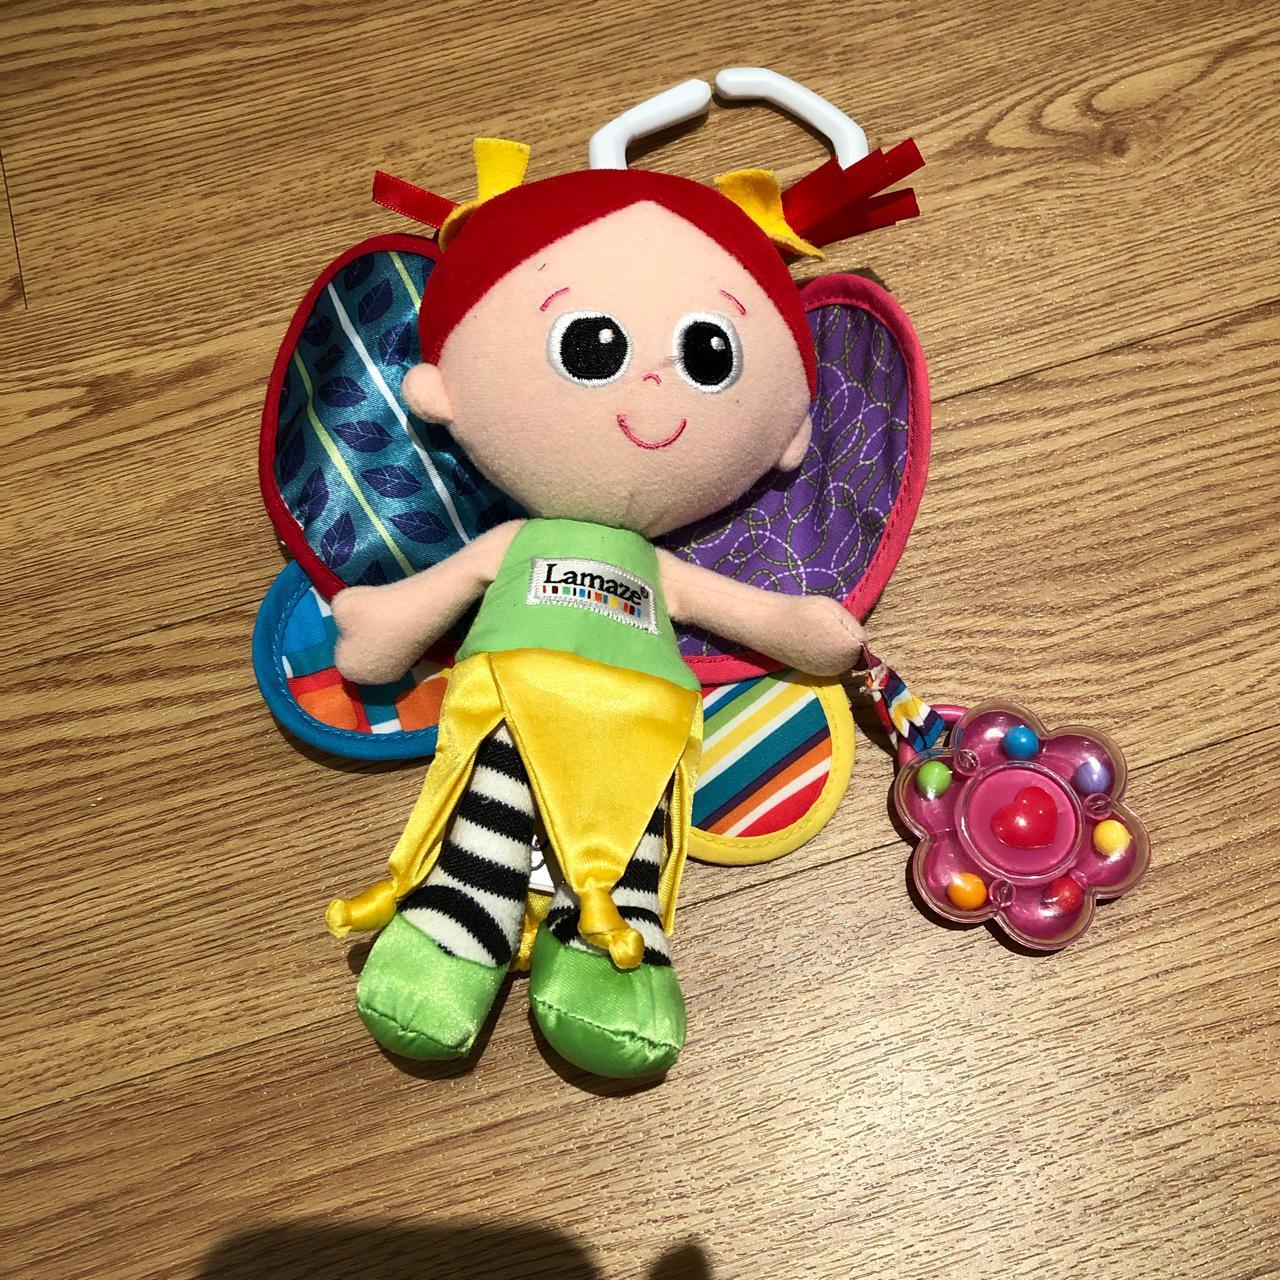 Lamaze Fairy Clip On Pram Toy With